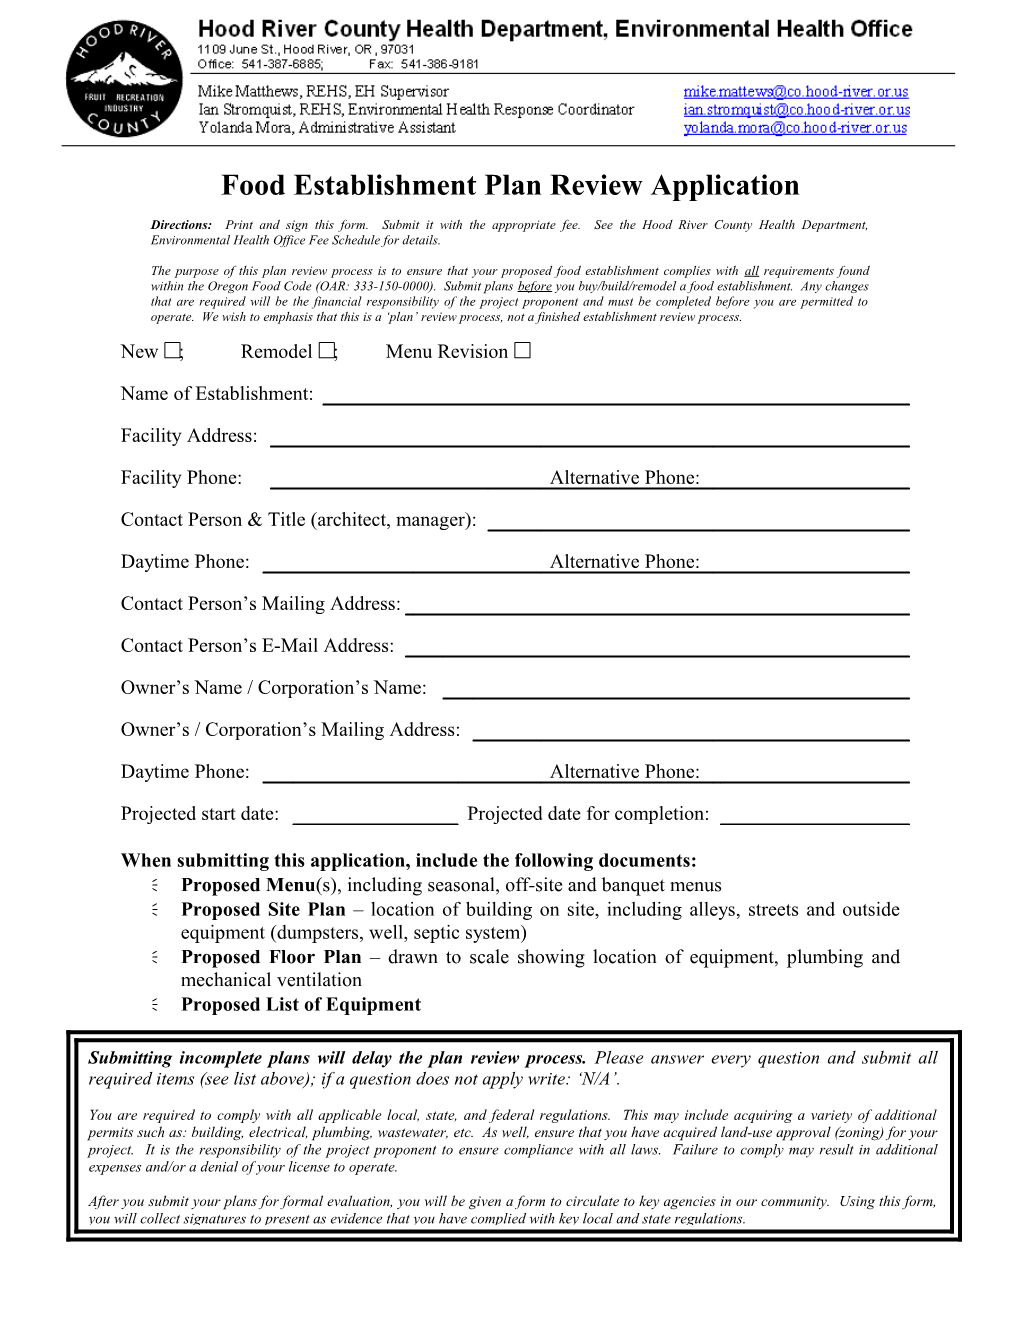 Food Establishment Plan Review Application